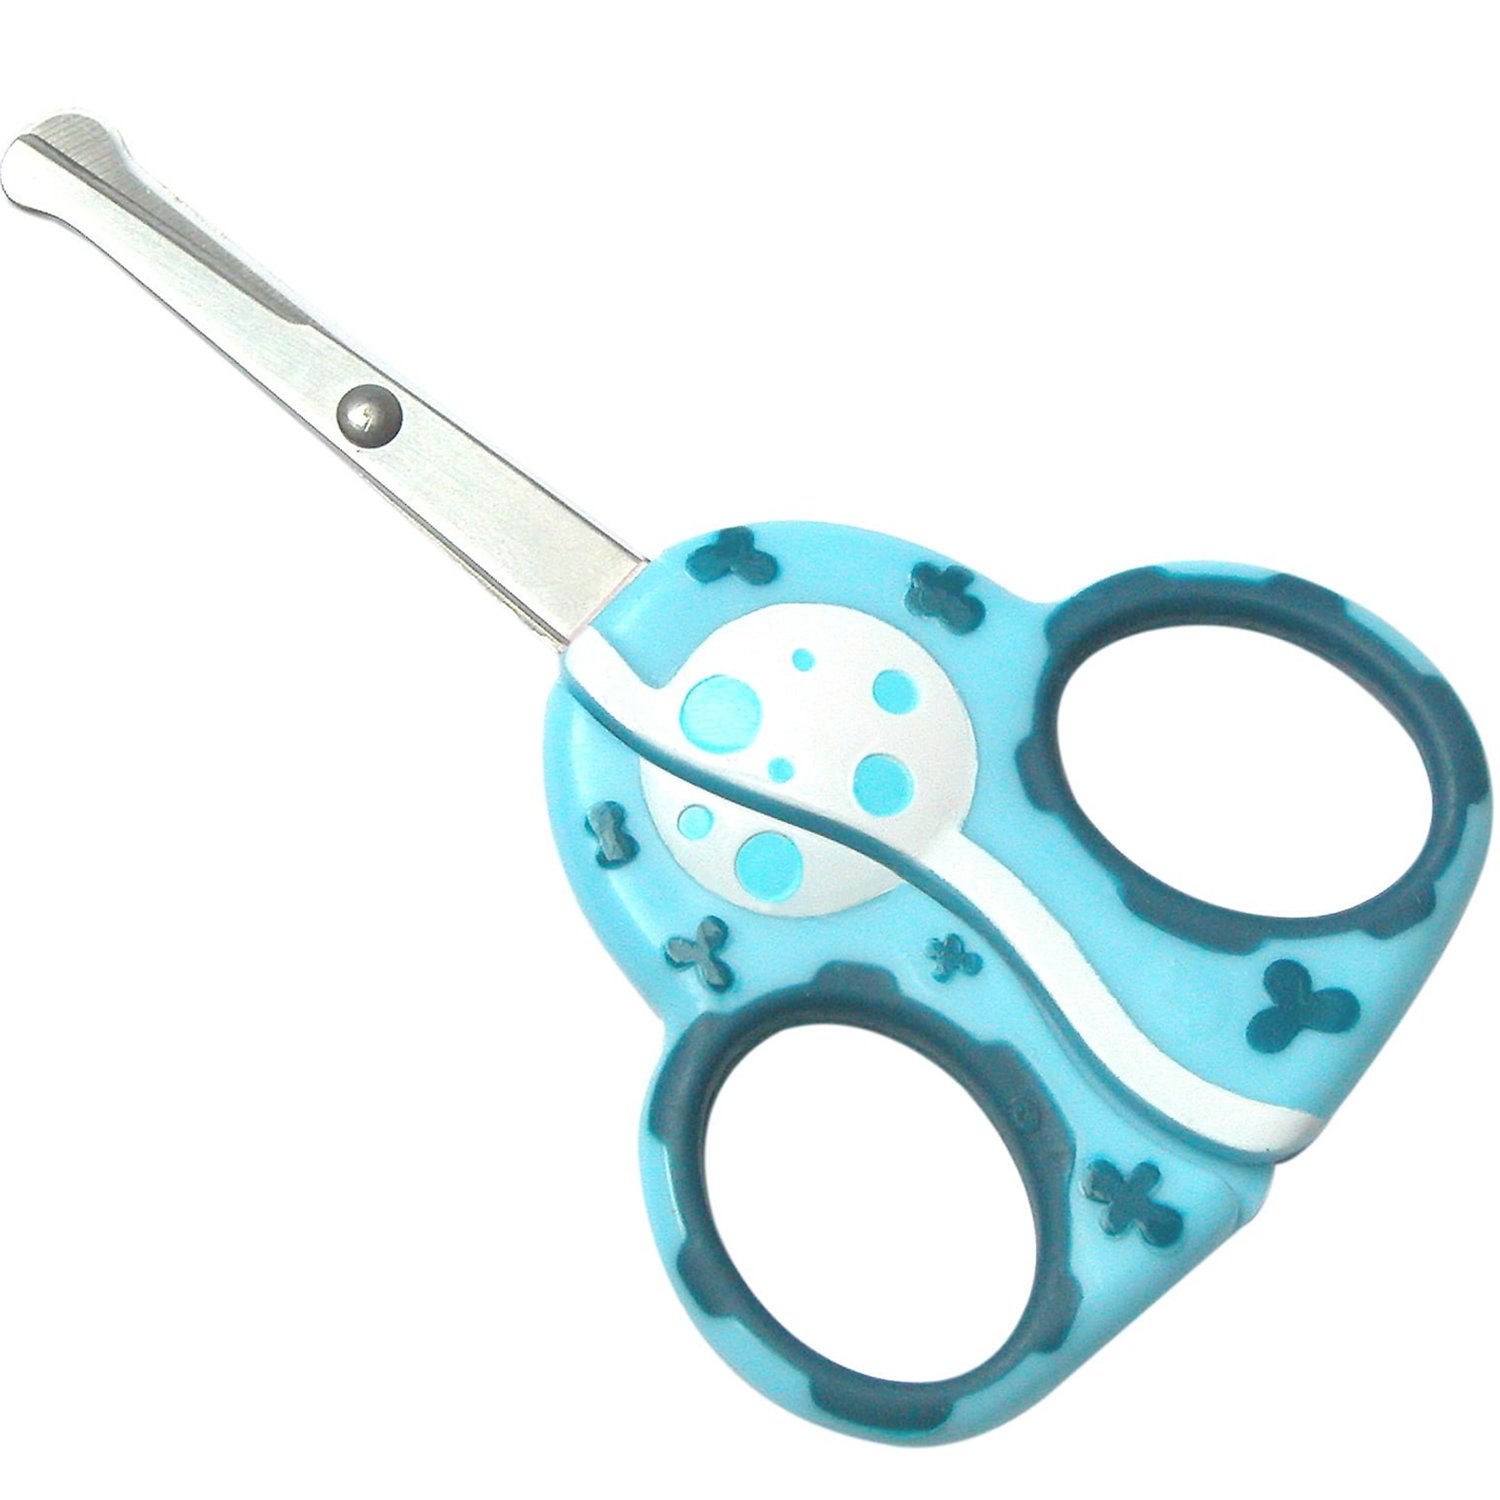 Mam Mam Primamma Safety Scissors 0m+ Γαλάζιο Ψαλιδάκι Ασφαλείας για Περιποίηση των Πρώτων Νυχιών του Μωρού 1 Τεμάχιο, Κωδ 900B